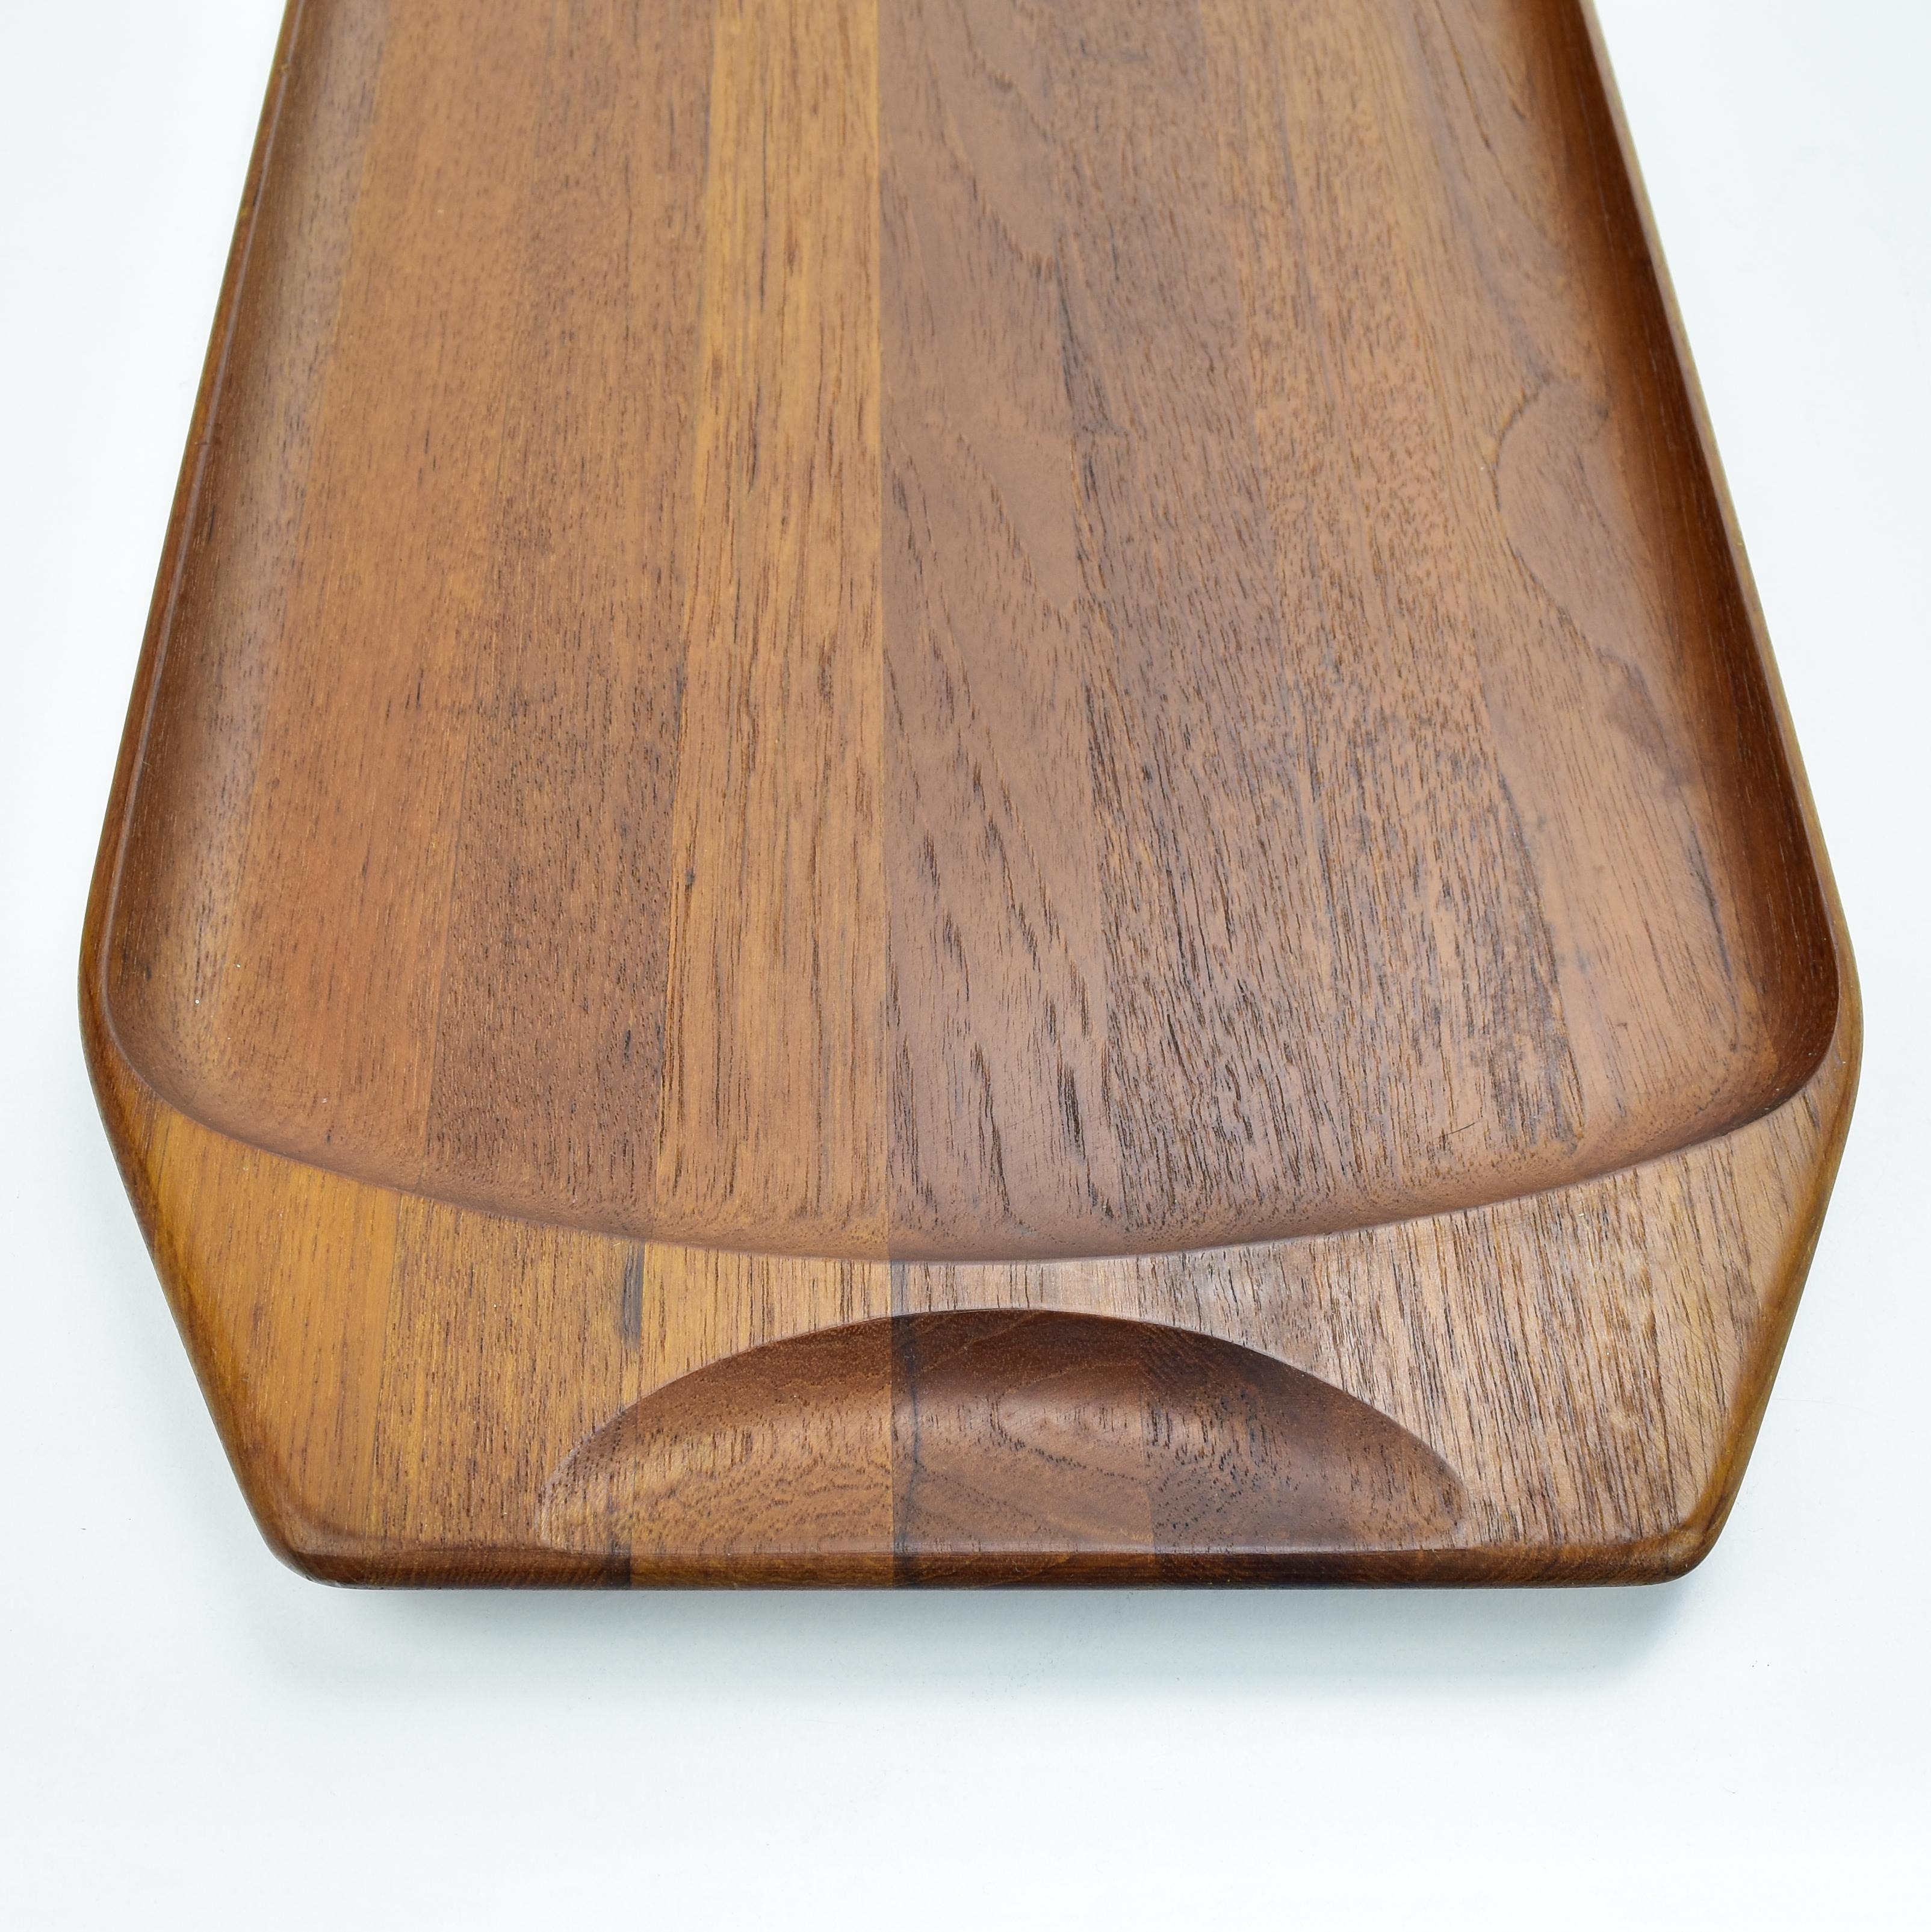 1950s Danish Modern Design Teak Wood Serving Tray by Jens Quistgaard Dansk MCM In Good Condition For Sale In Bad Säckingen, DE